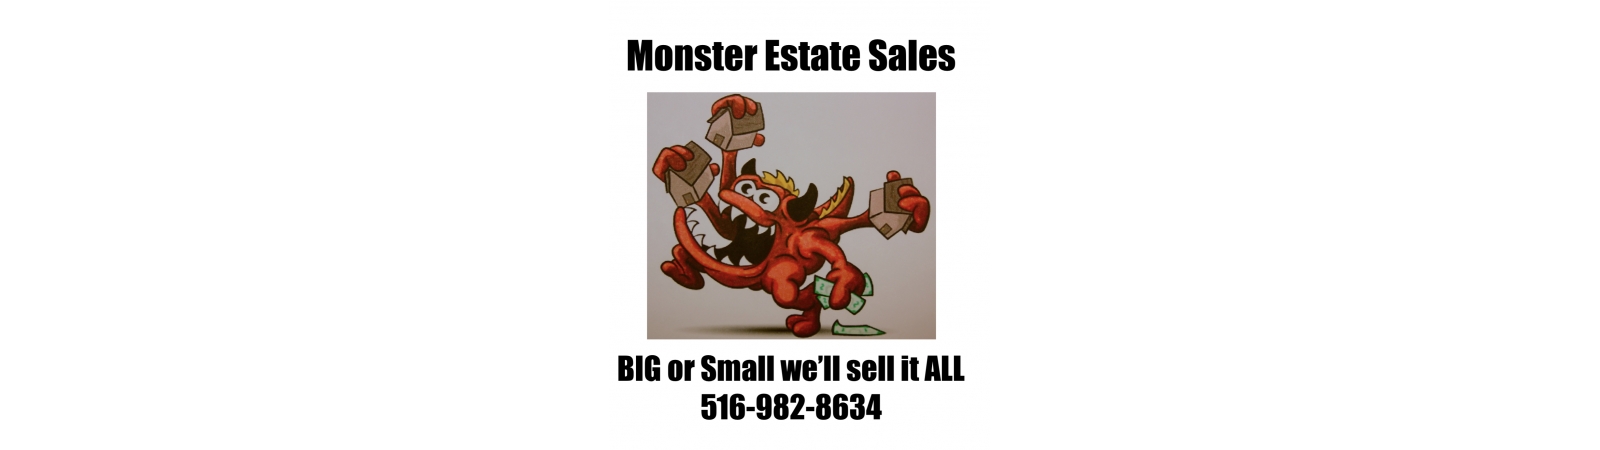 Monster Estate Sales Inc. | AuctionNinja